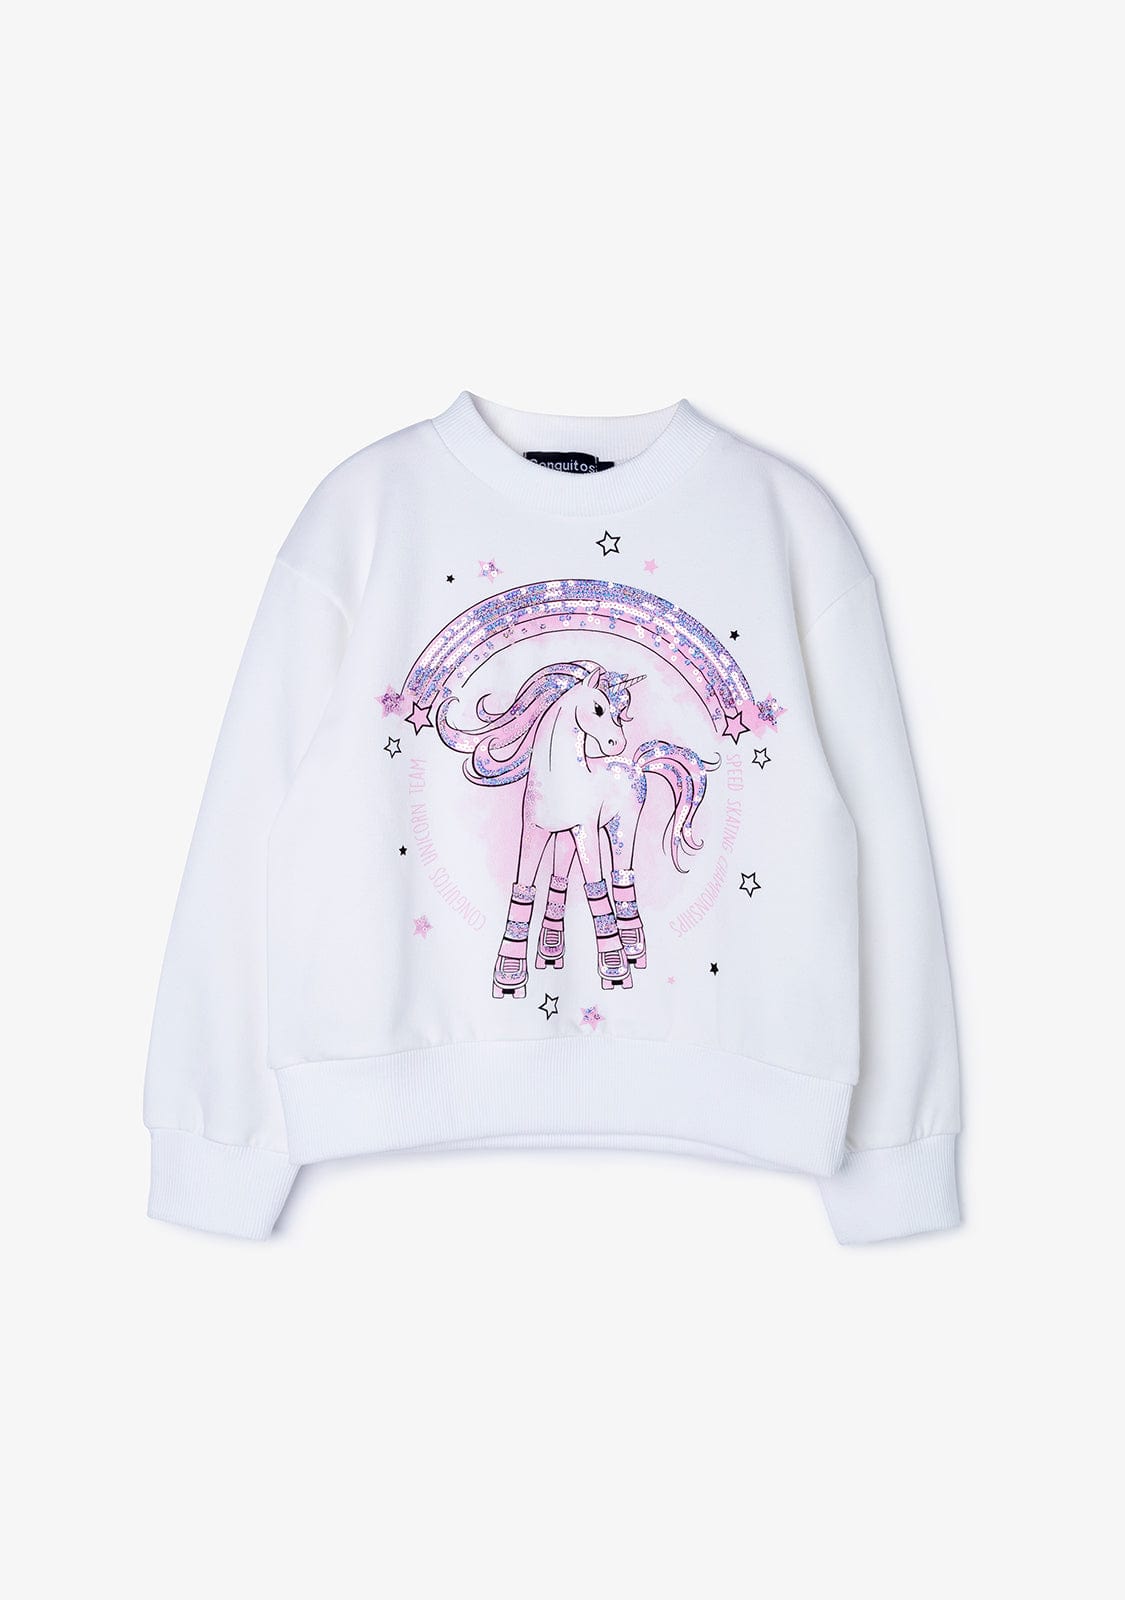 CONGUITOS TEXTIL Clothing Girl's Unicorn Sequins Sweatshirt